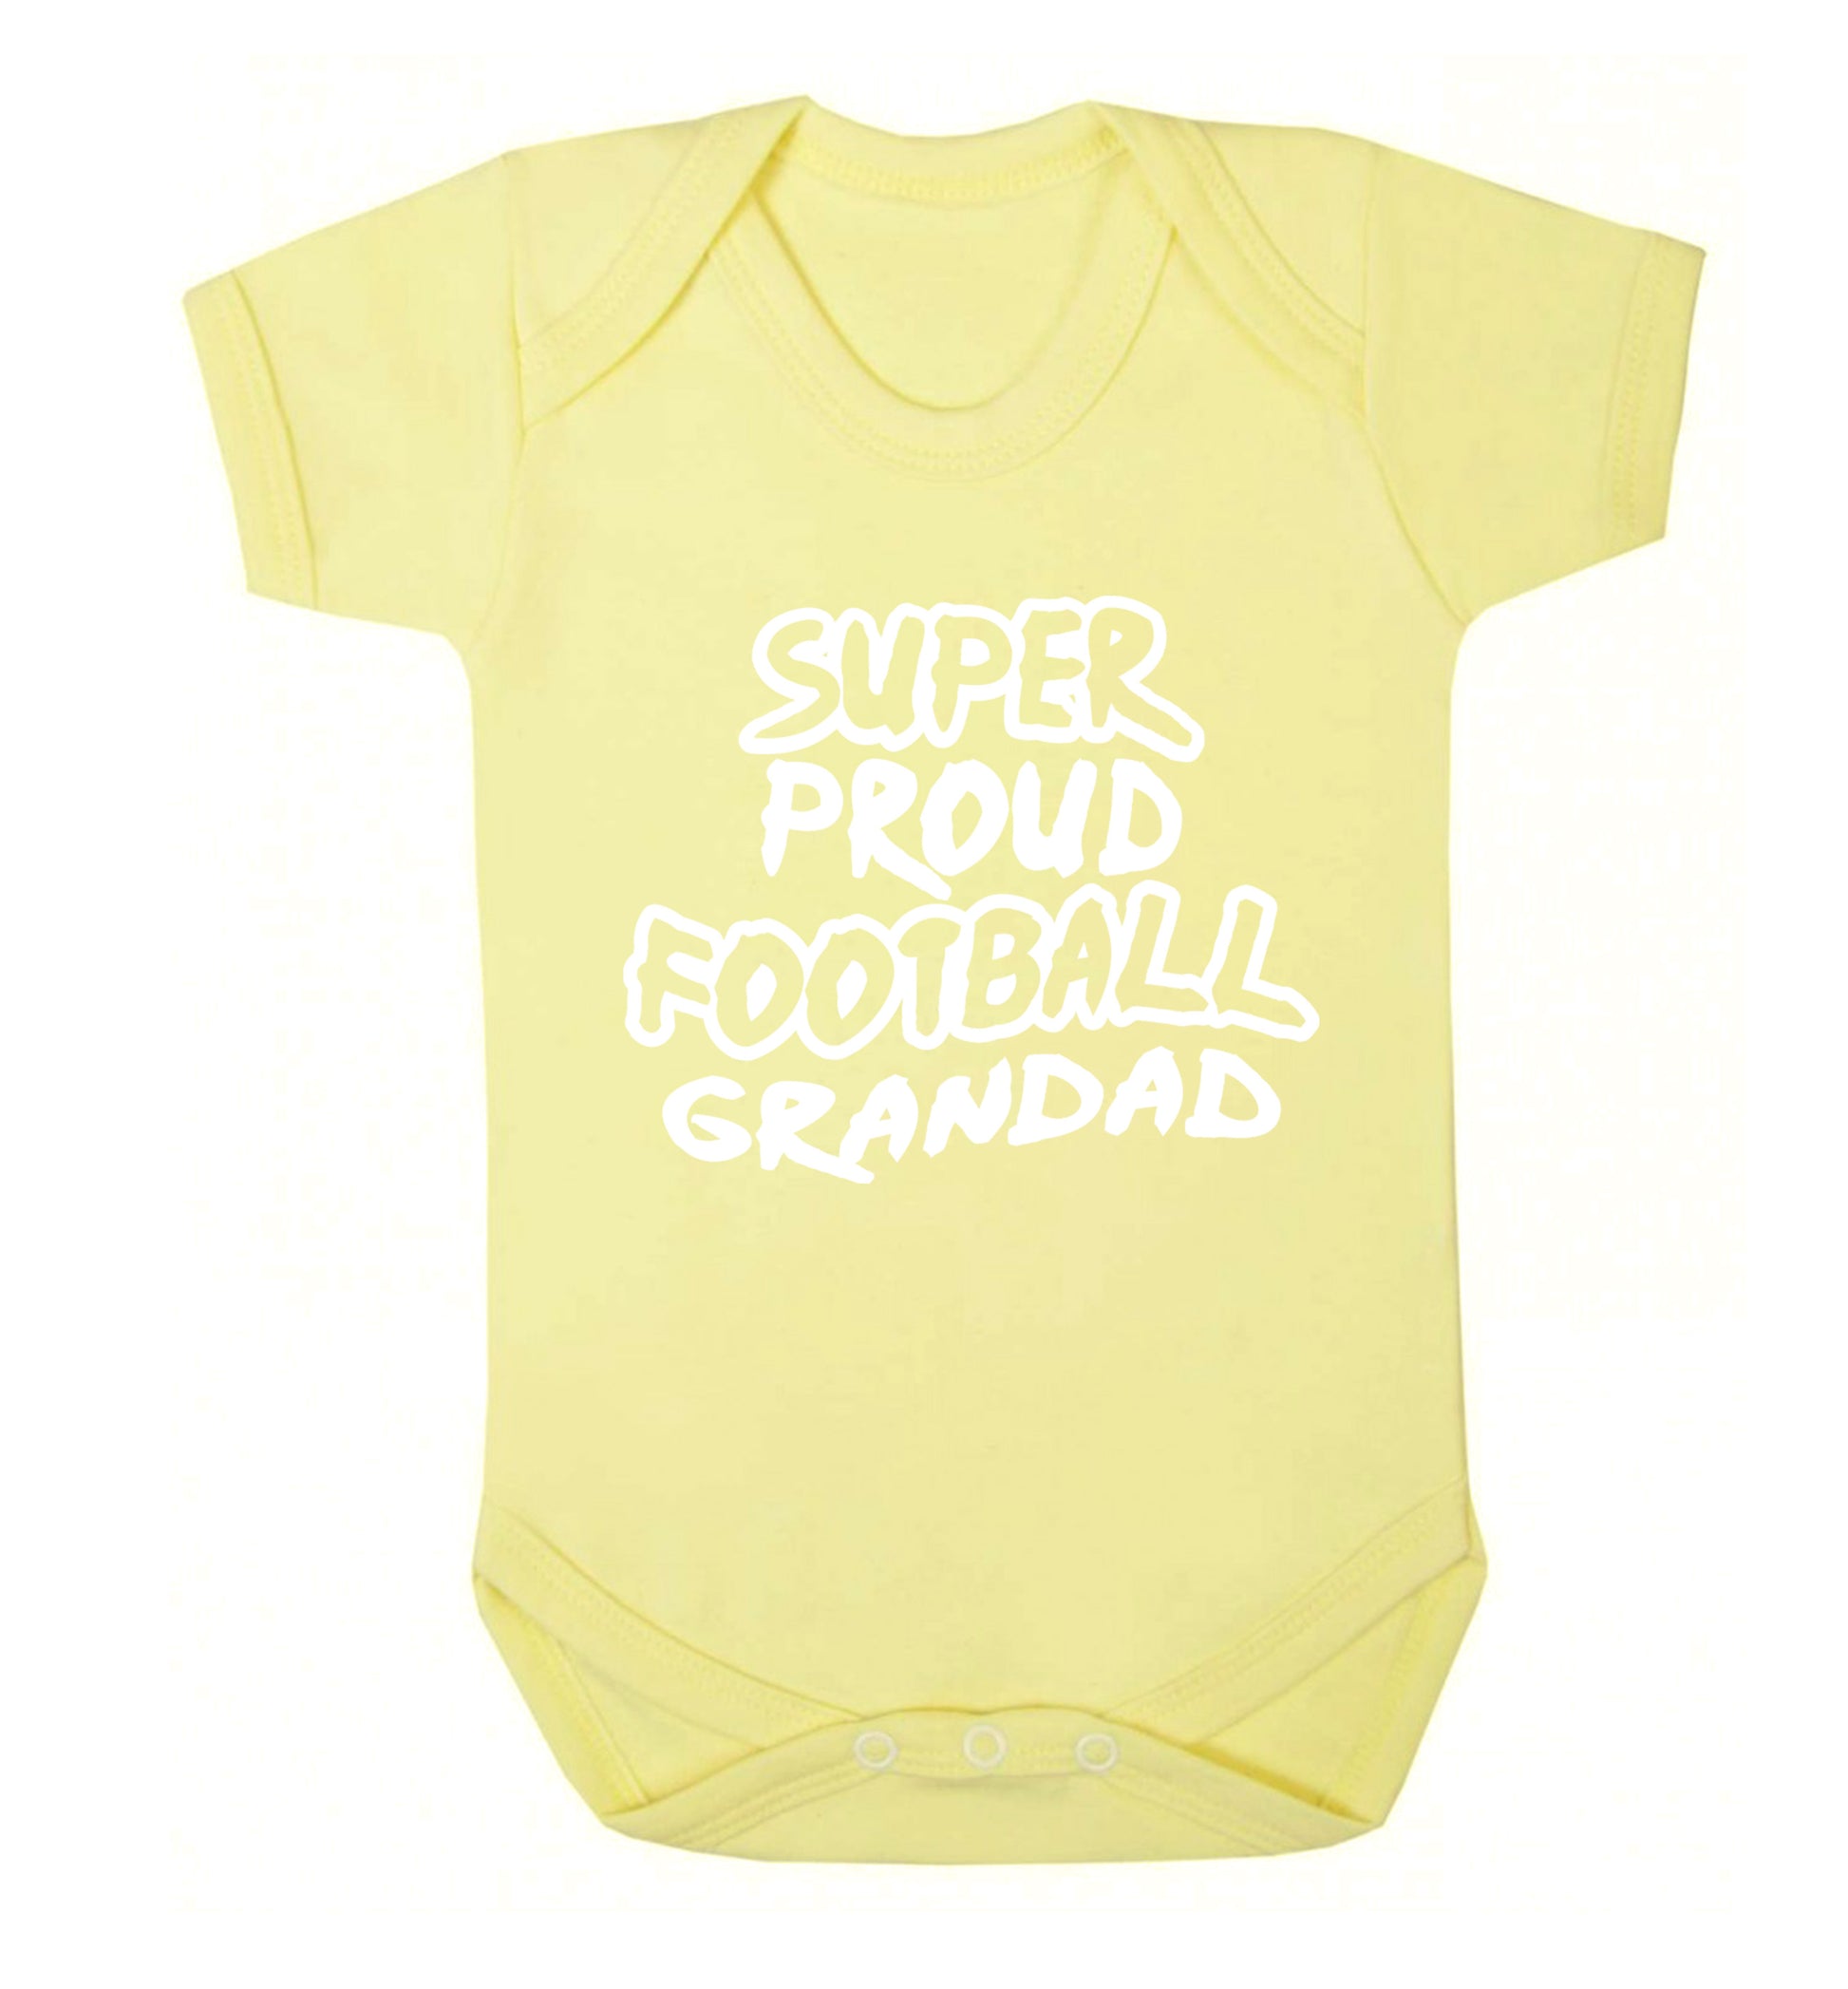 Super proud football grandad Baby Vest pale yellow 18-24 months